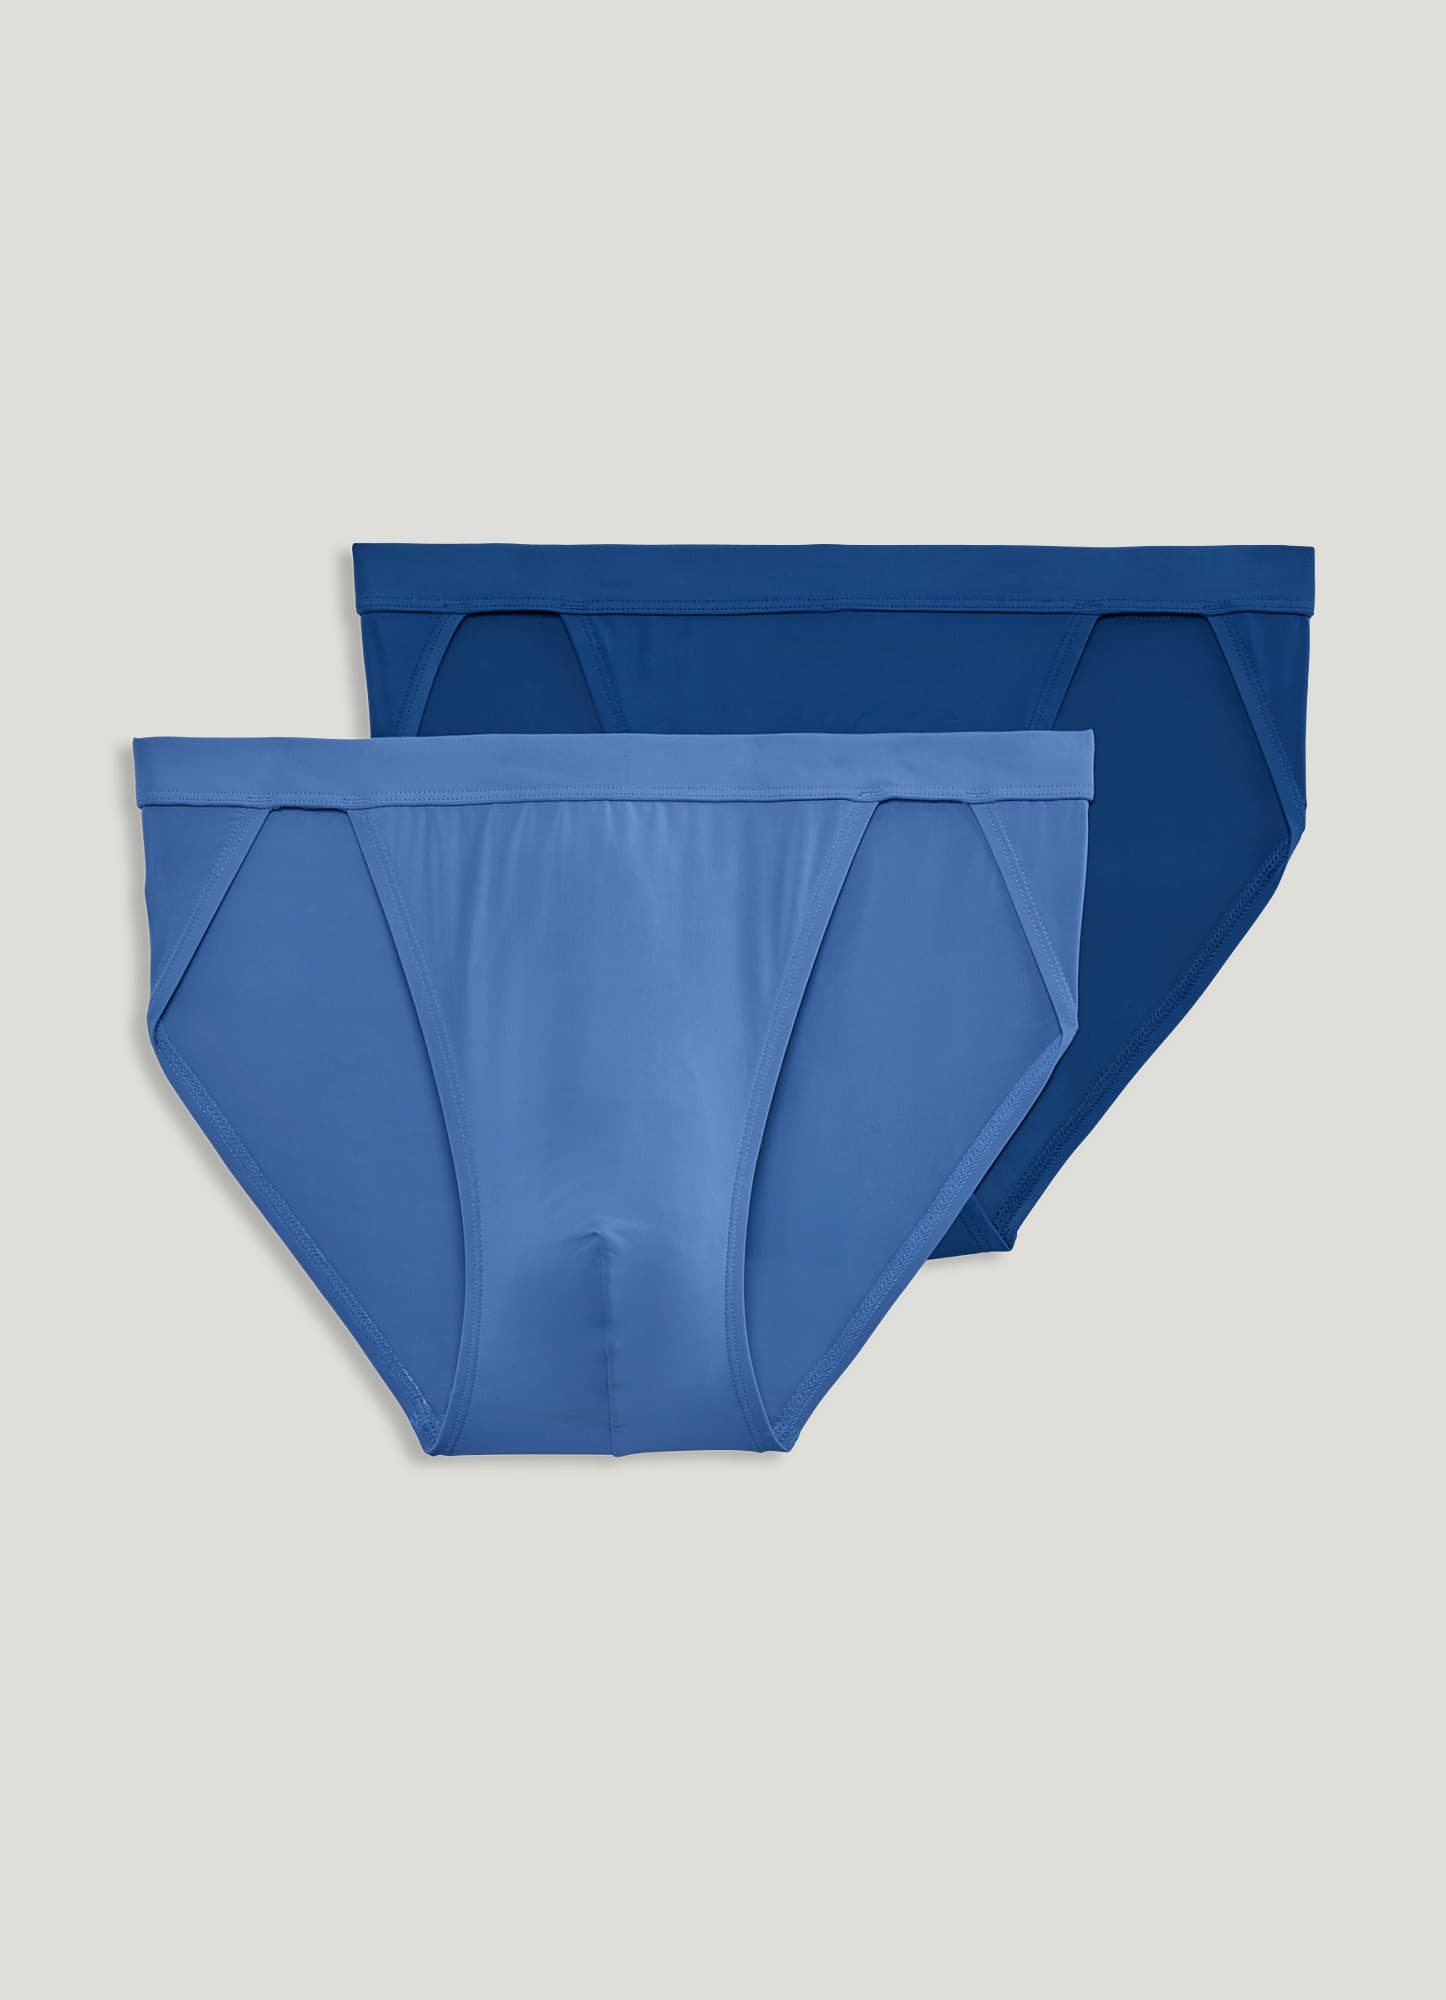 Jockey Men's Underwear Elance String Bikini - 2 Pack